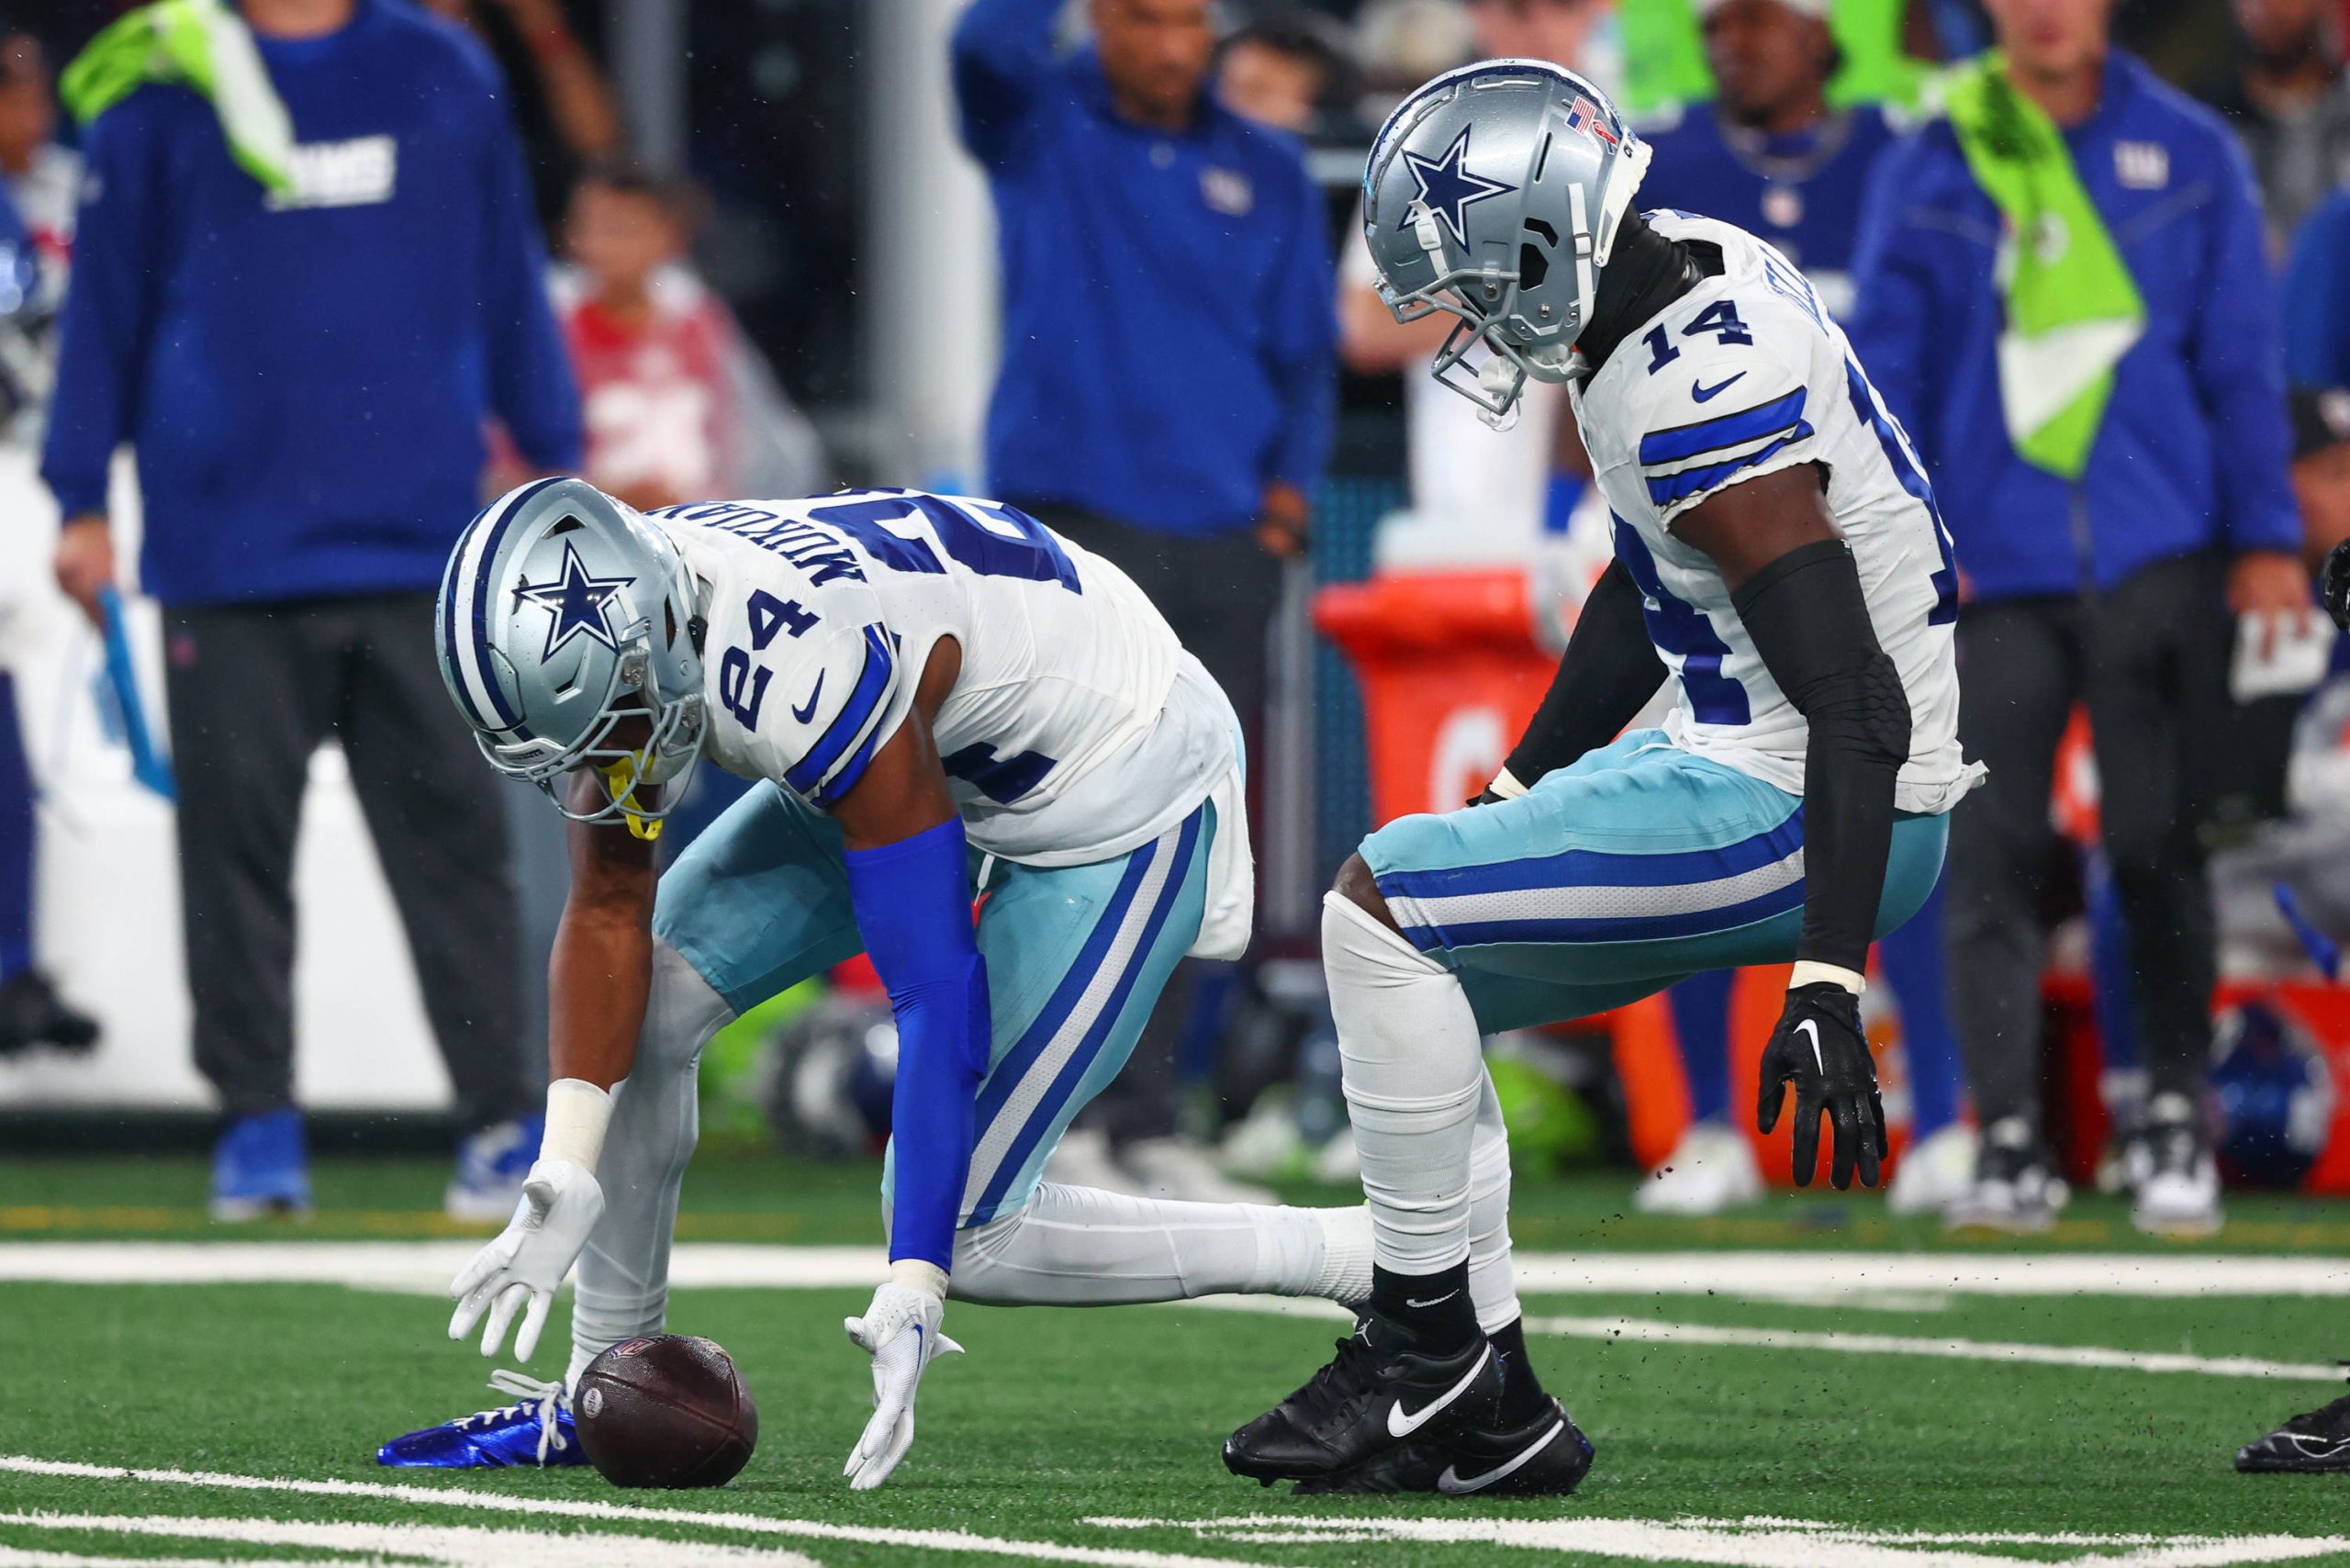 FootballR - NFL - Die Defense der Dallas Cowboys besiegt die Giants.